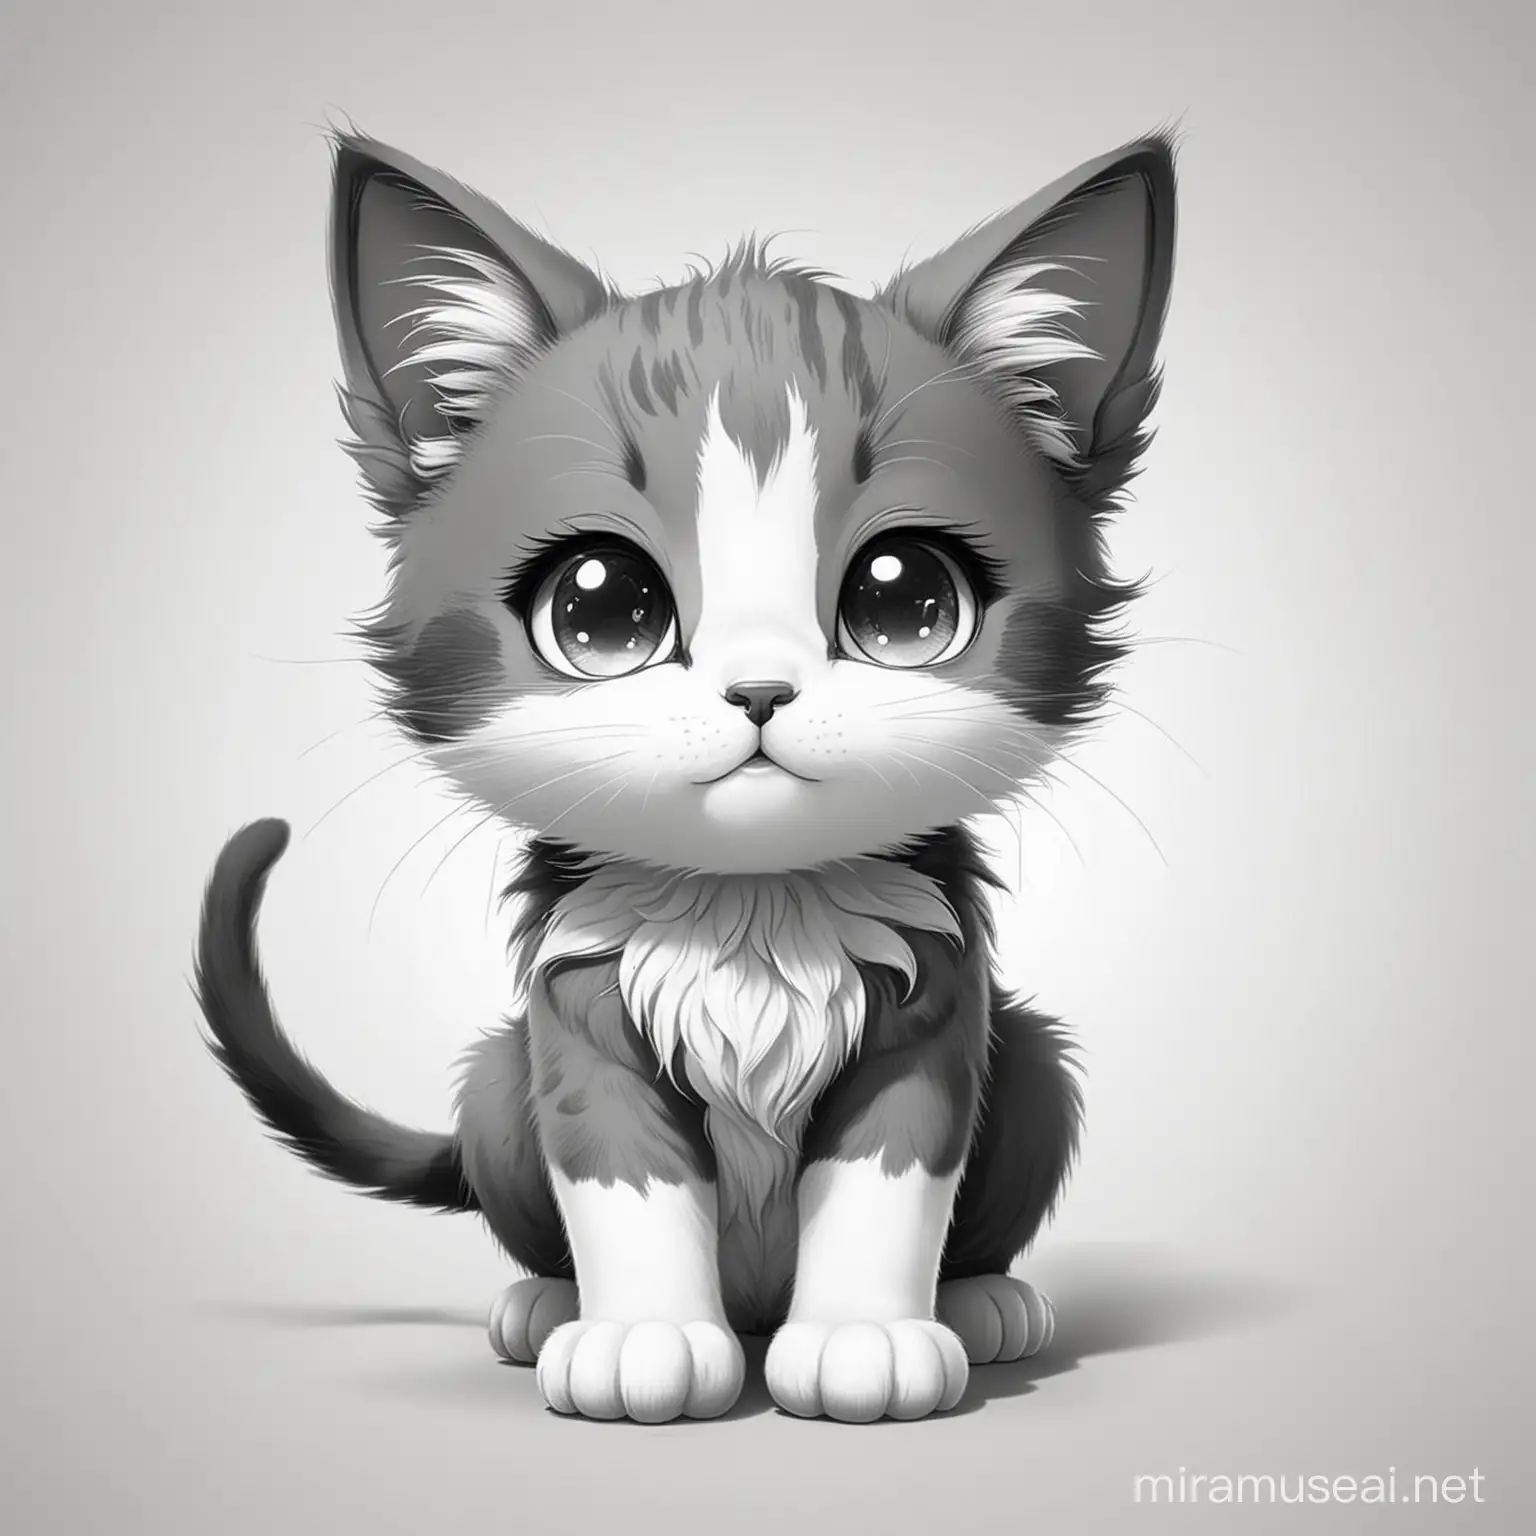 Adorable Black and White Anime Kitten Cartoon on White Background